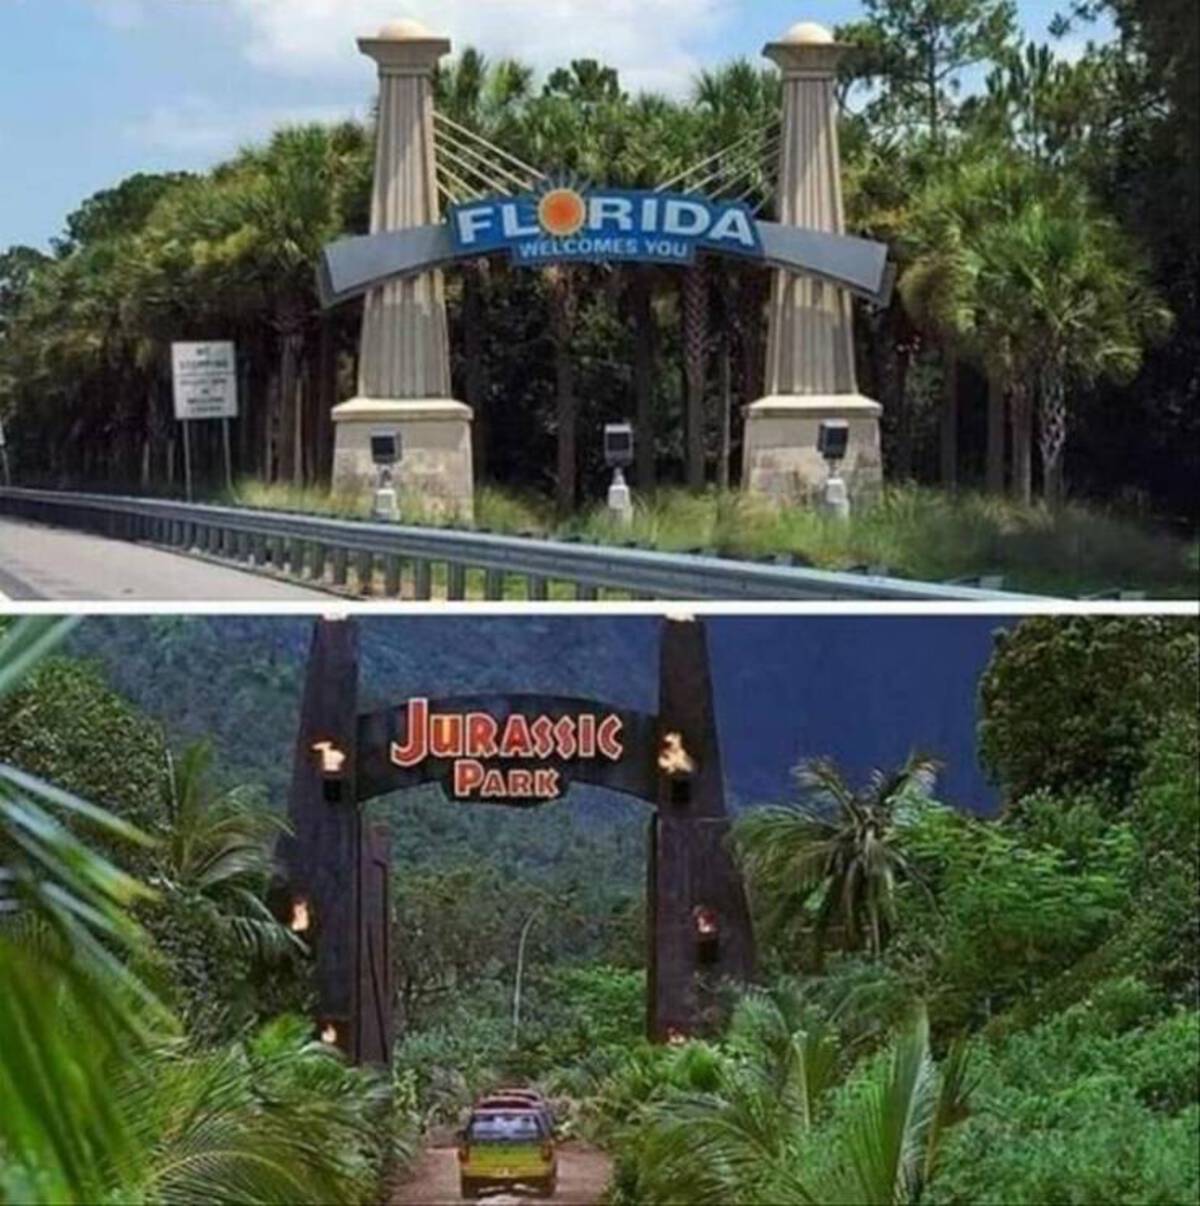 florida welcomes you - Florida Welcomes You Jurassic Park